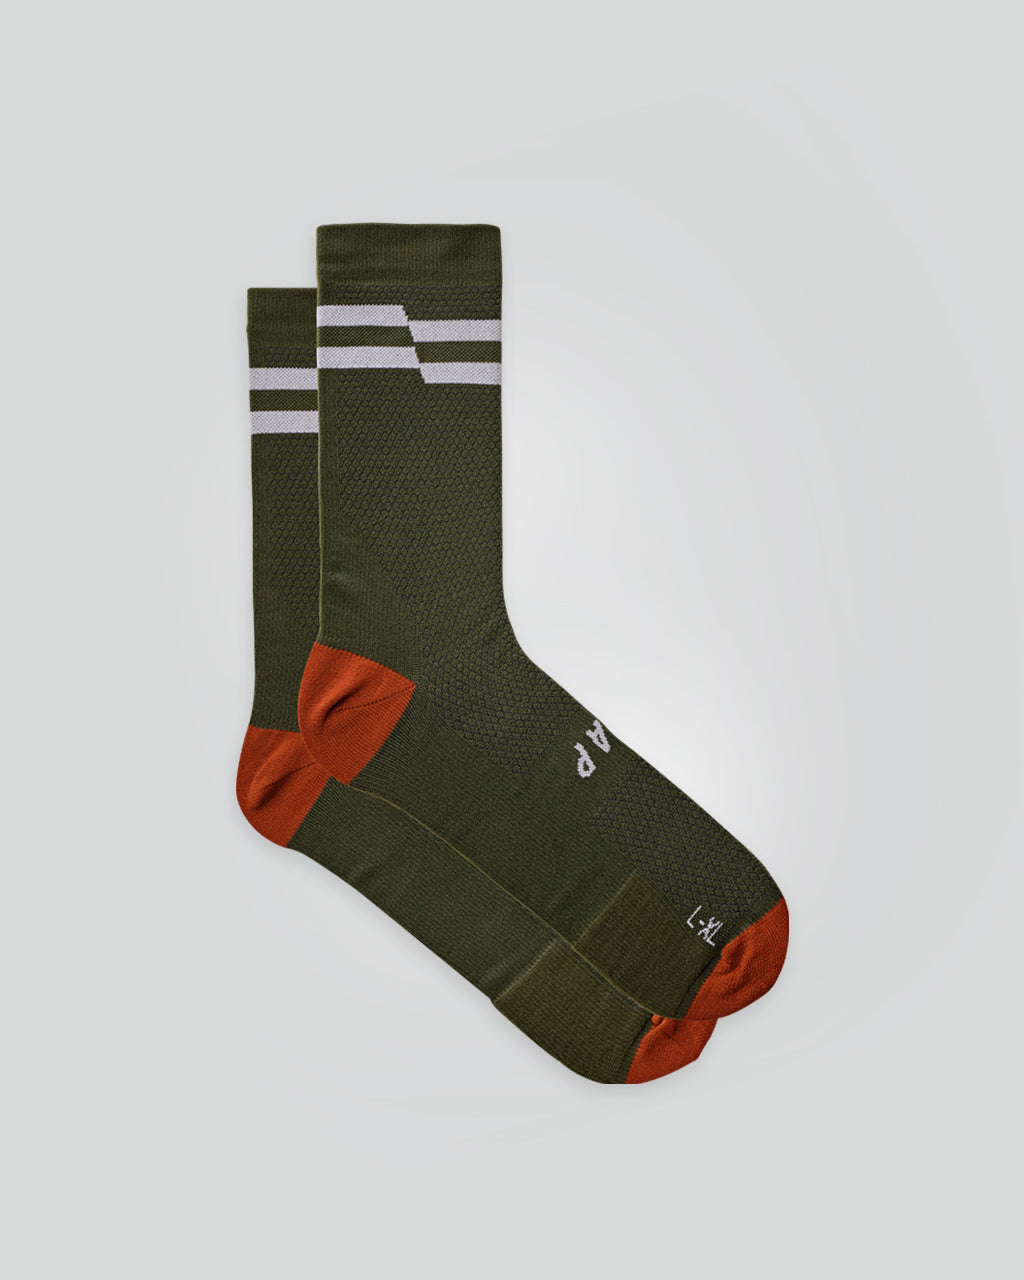 Emblem Sock - MAAP Cycling Apparel